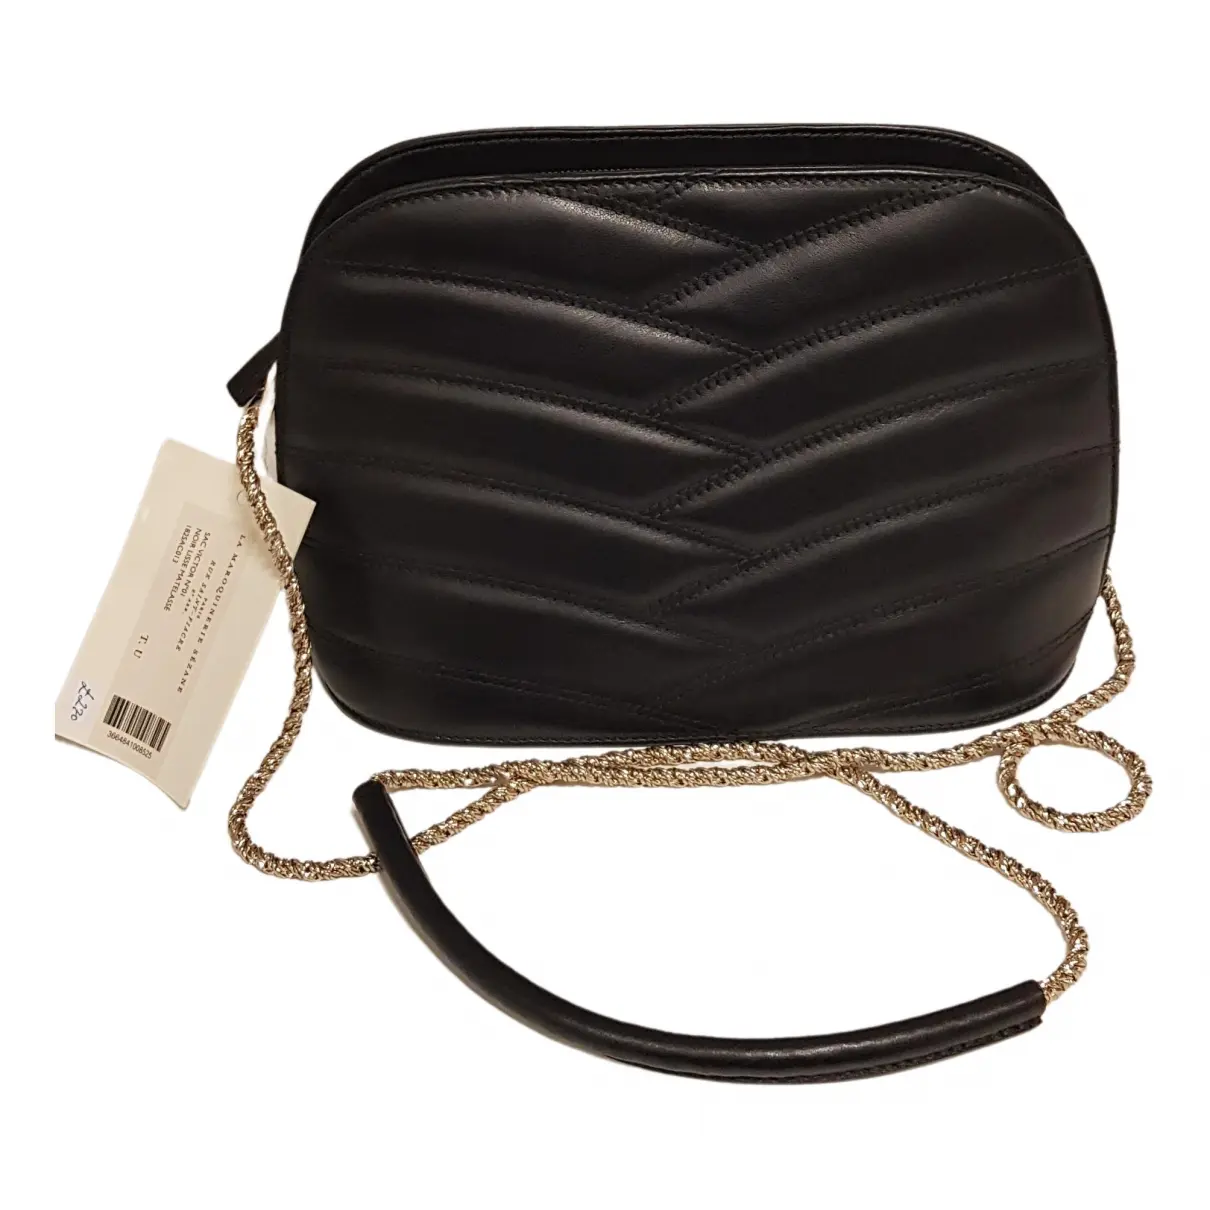 Victor leather handbag Sézane